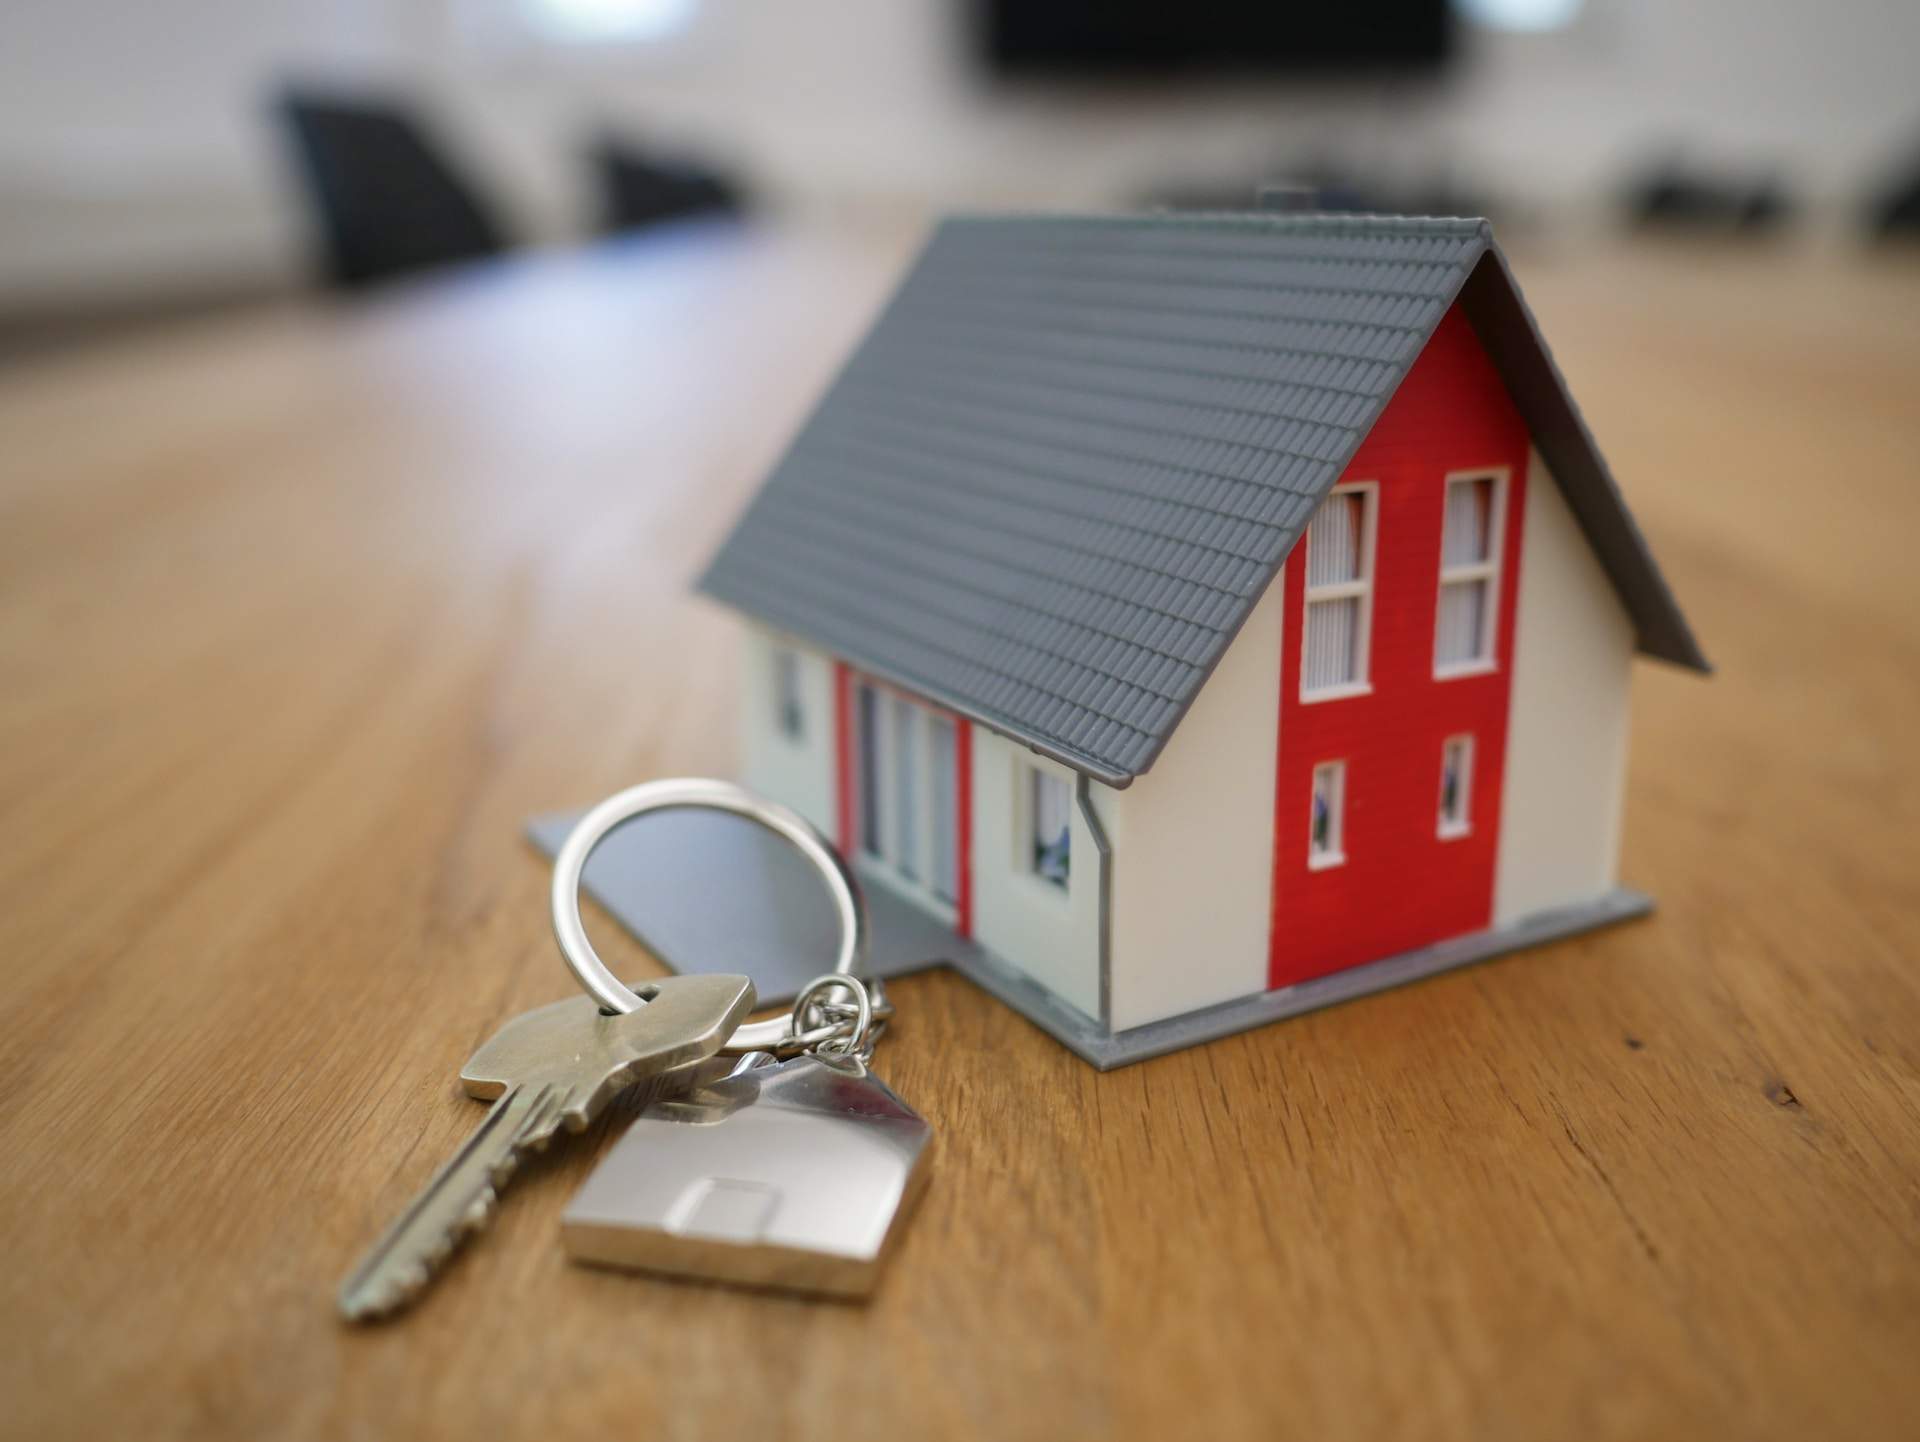 Model house next to a house key on a keychain